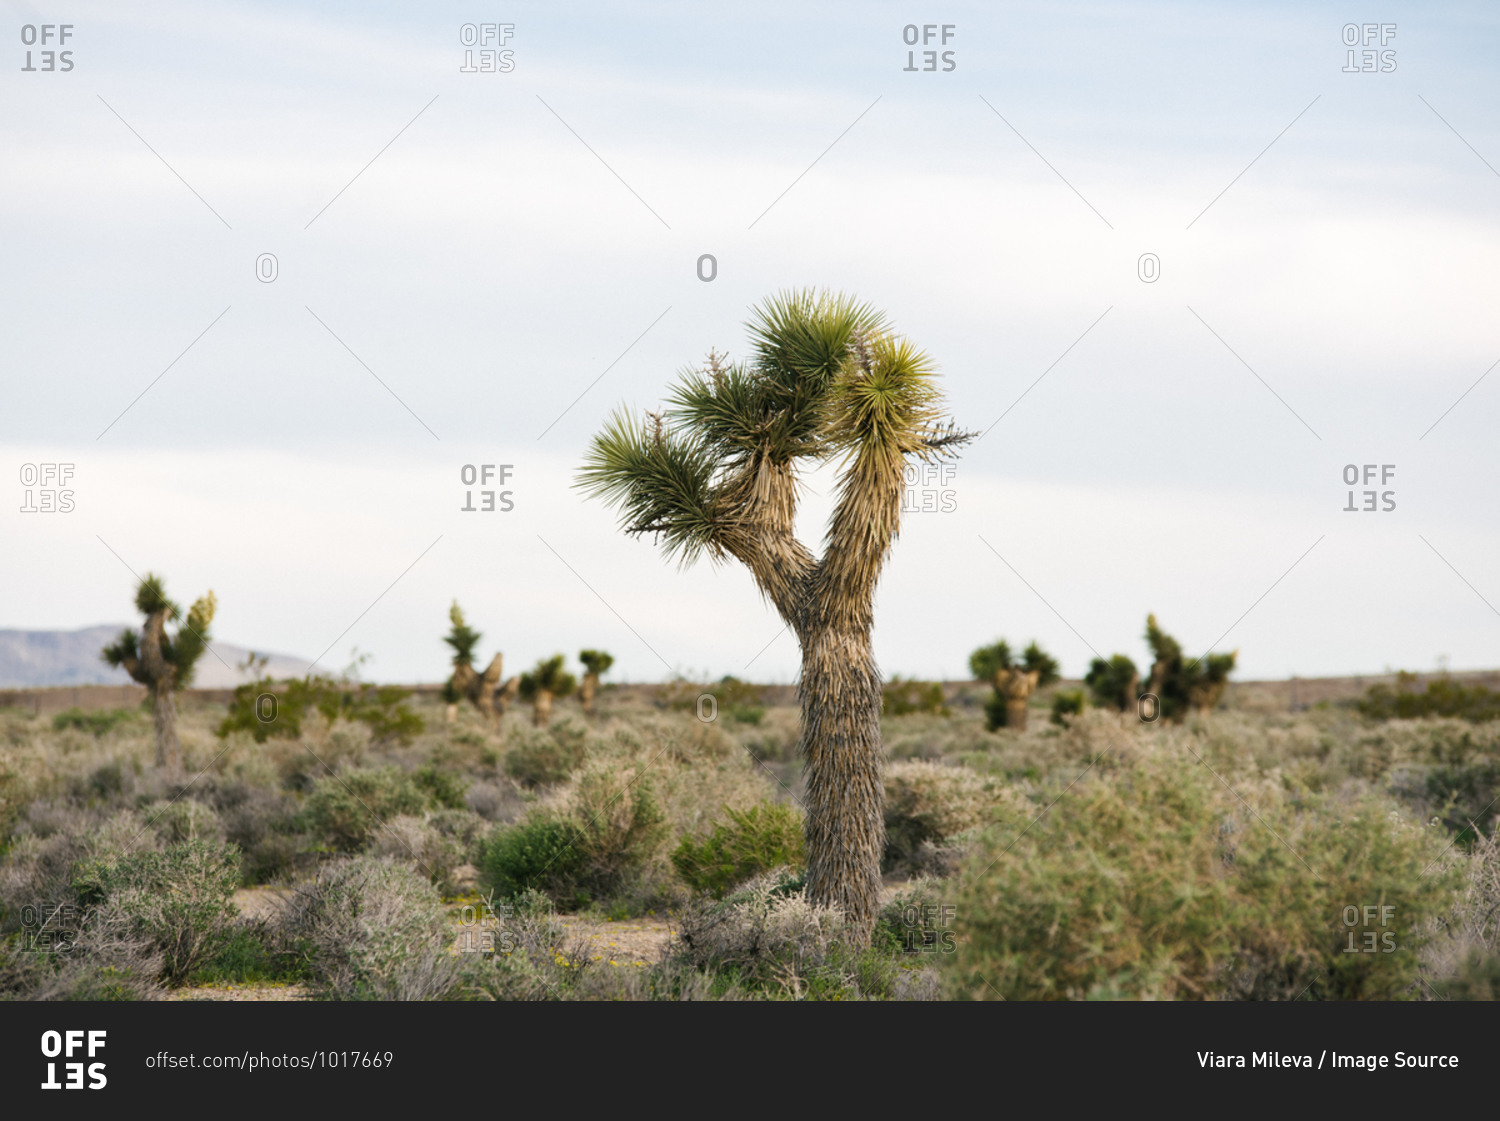 Joshua tree in desert landscape, Olancha, California, US